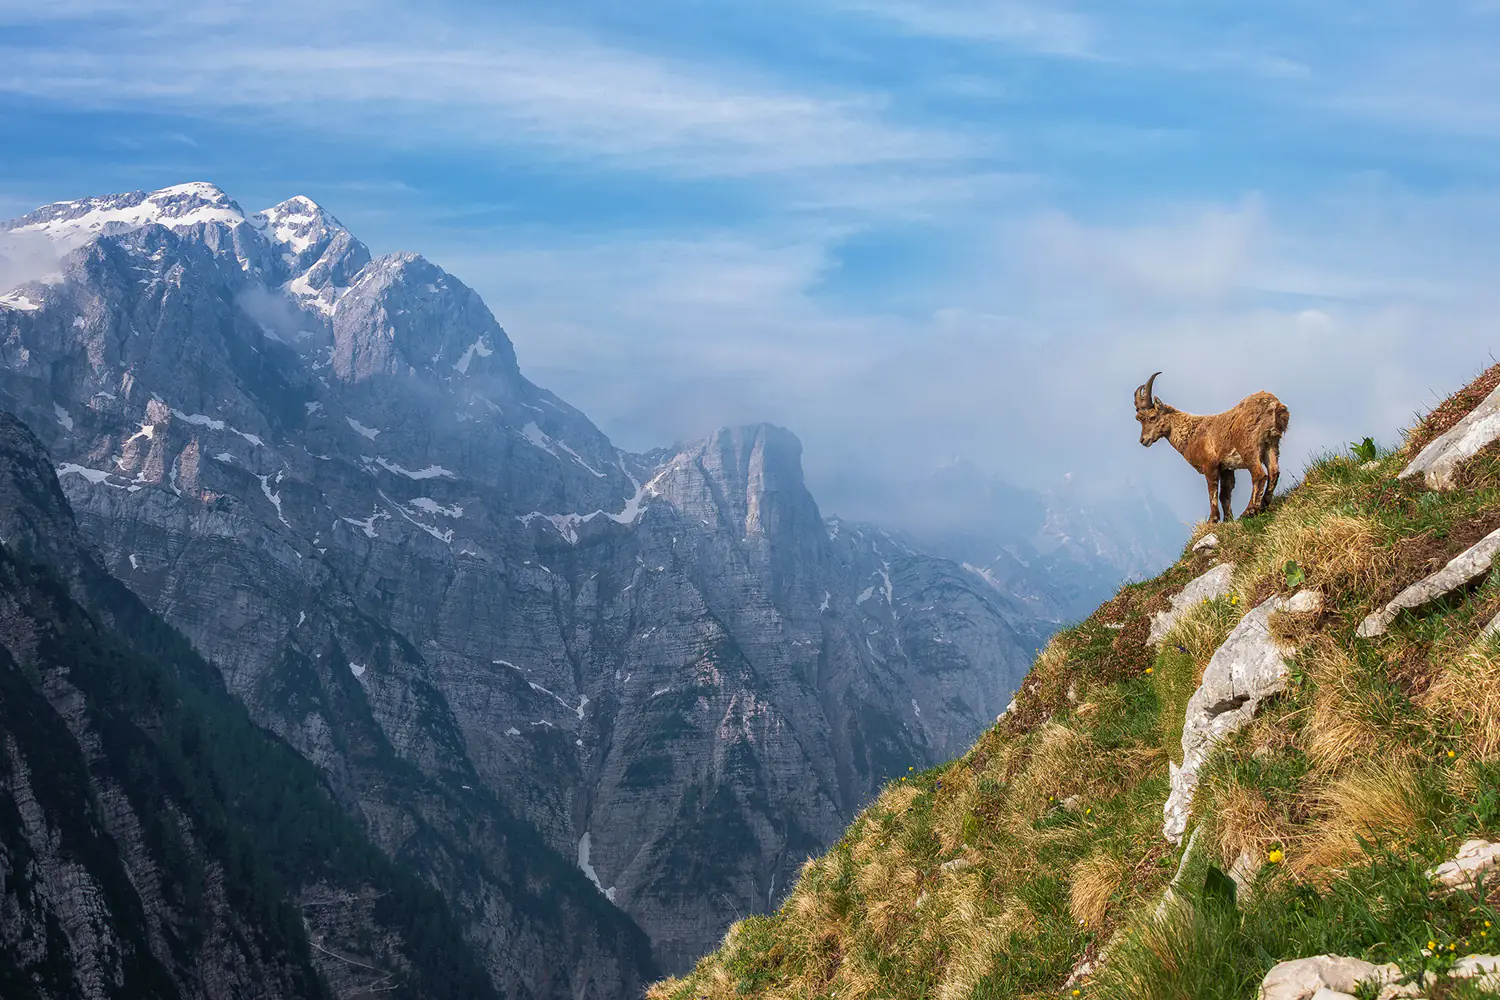 Fototapet Alpine Ibex In The Mountains